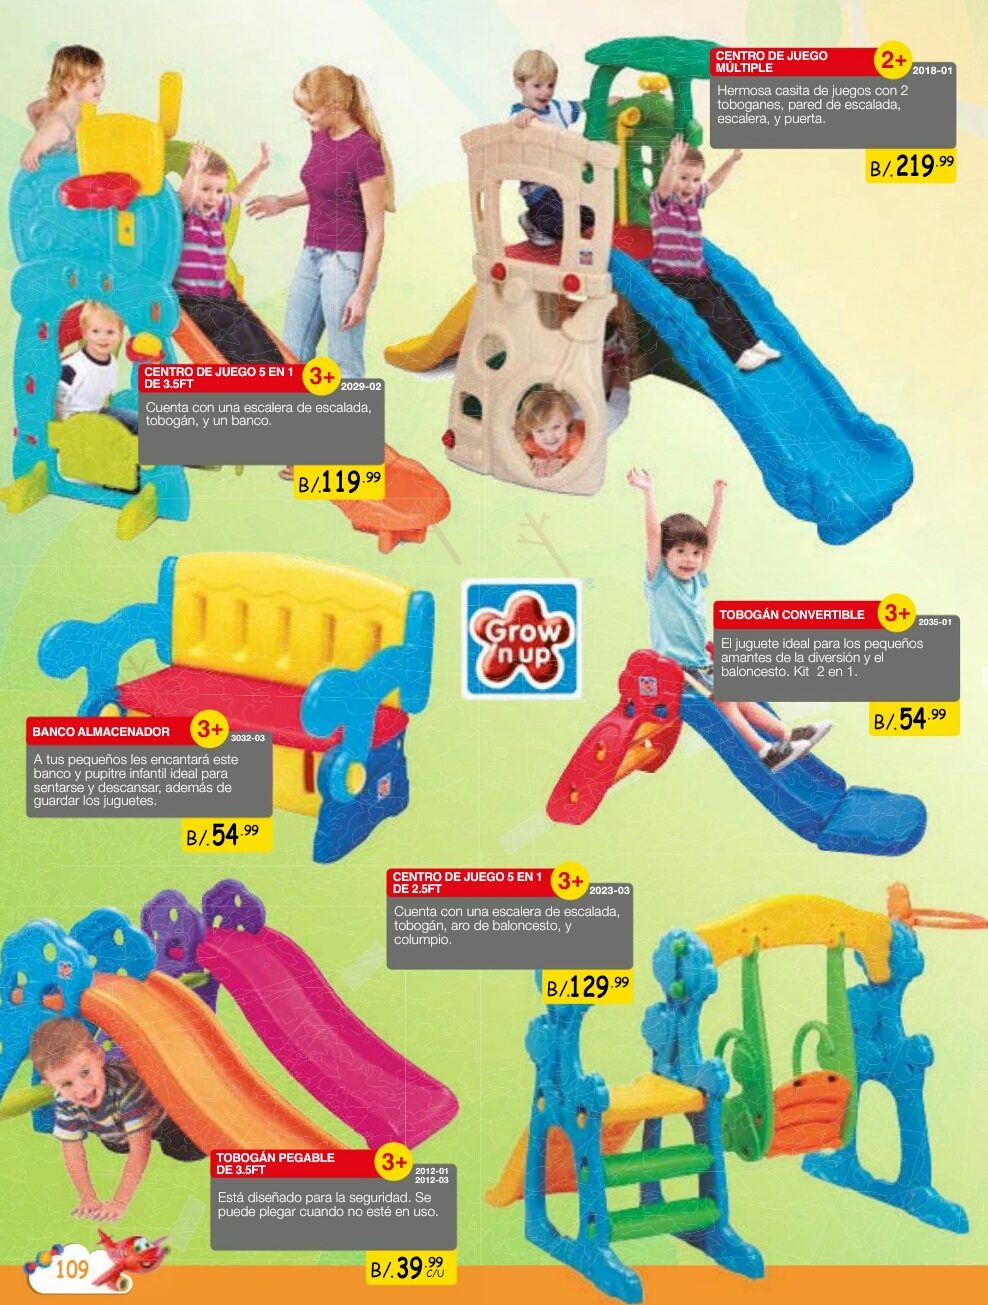 Catalogo Juguetes titan toys 2017 p109